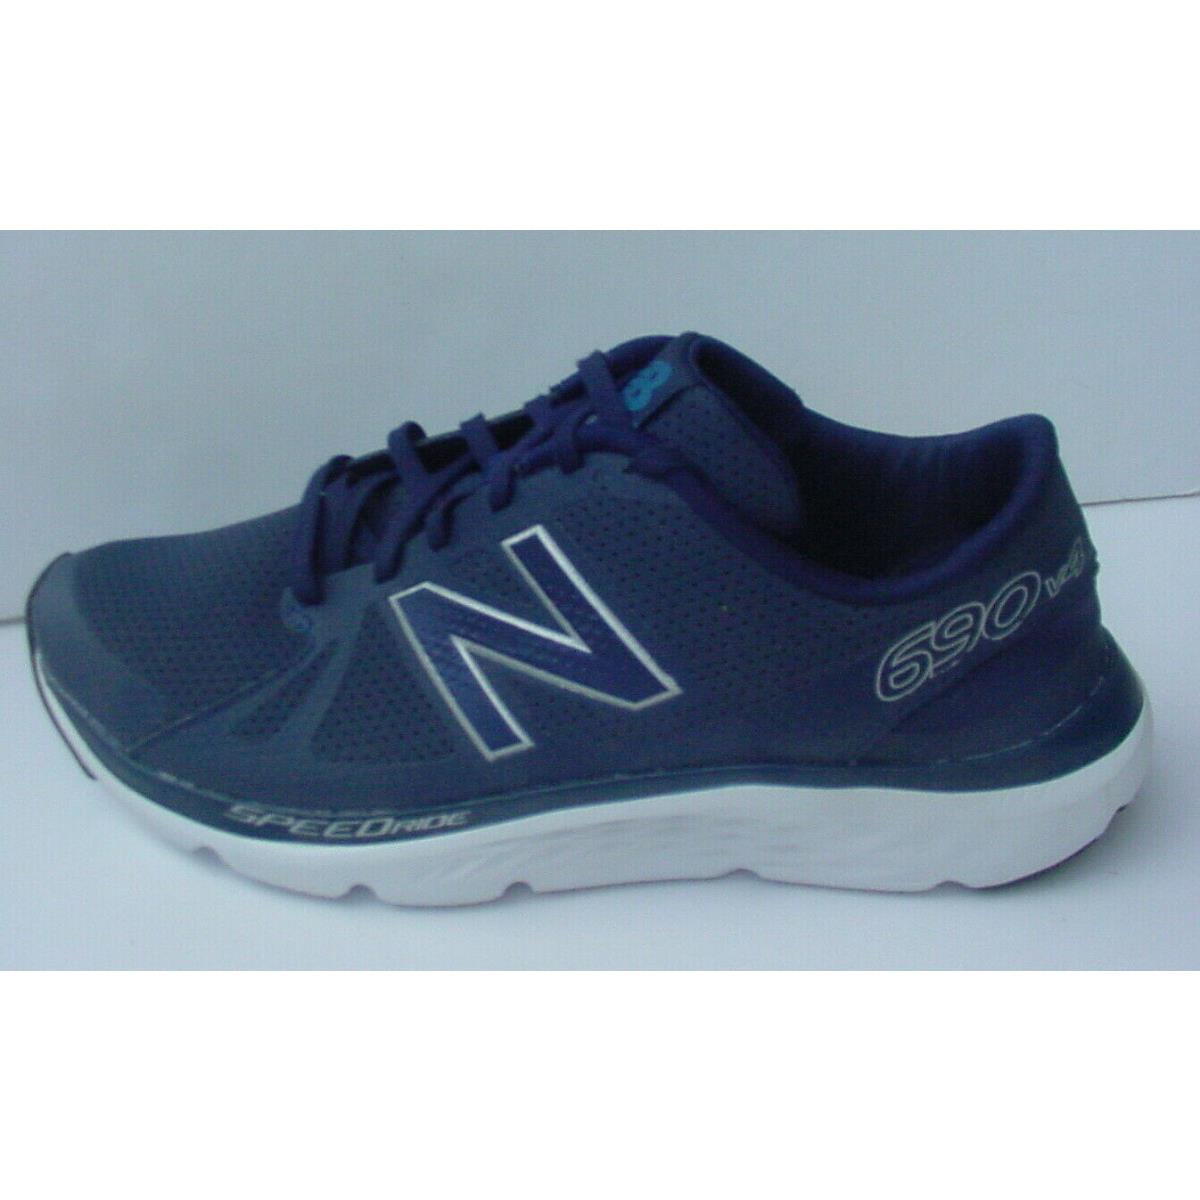 Balance Men`s Shoe Navy Blue White Speedride M690HB4 Sneakers Running Sz 10